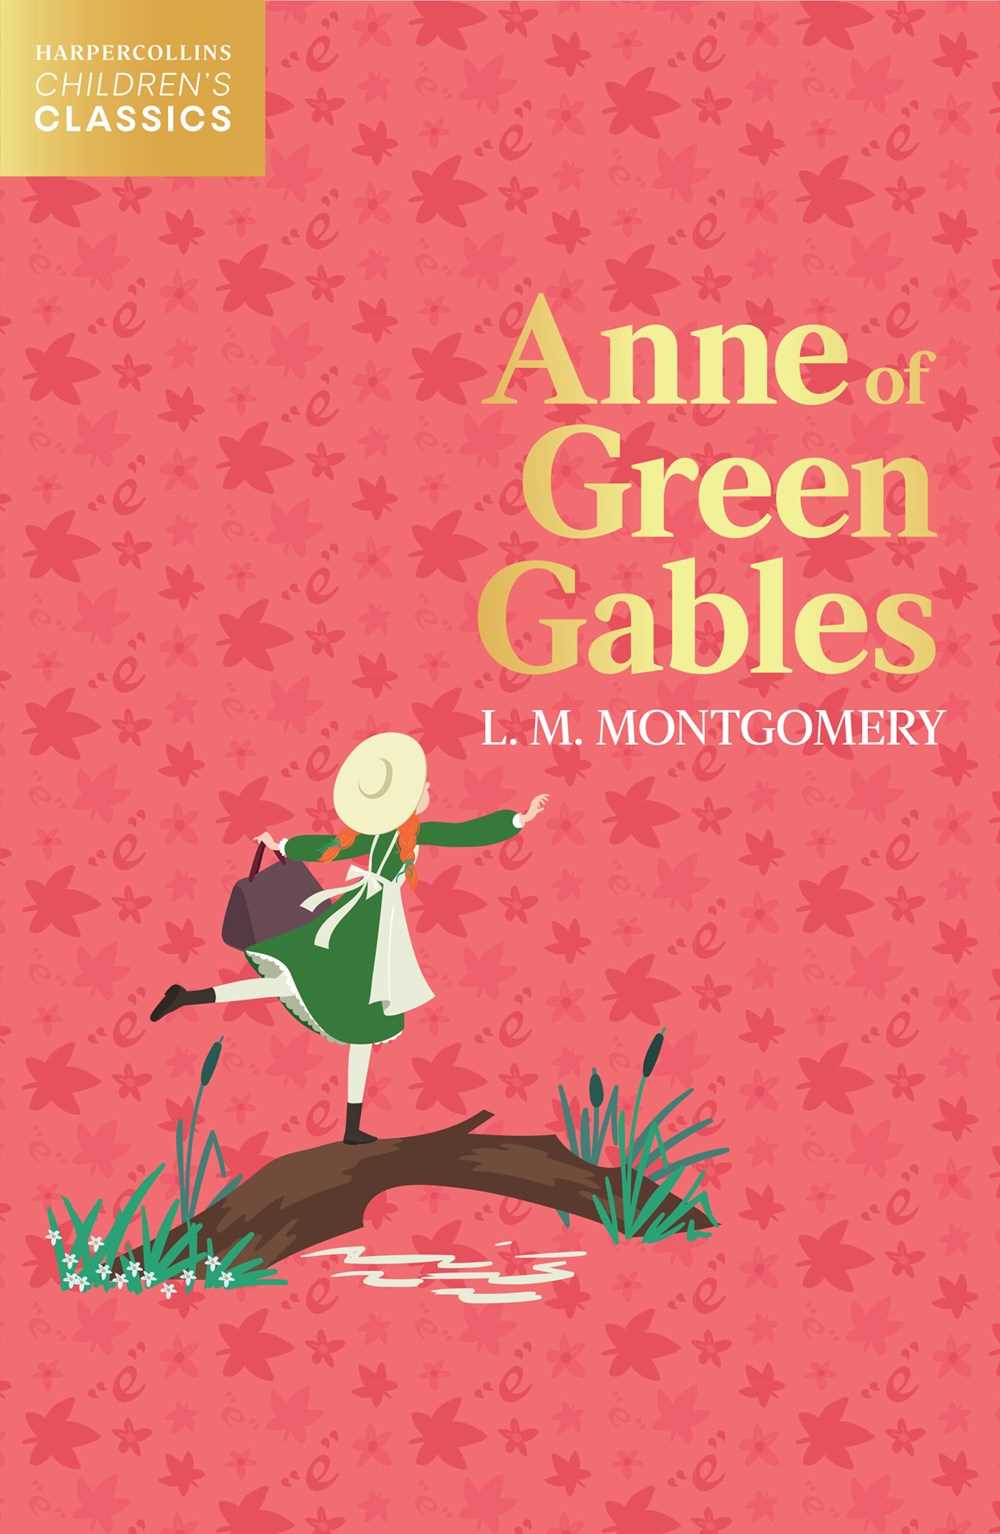 Anne of Green Gables (Harpercollins Children’s Classics)